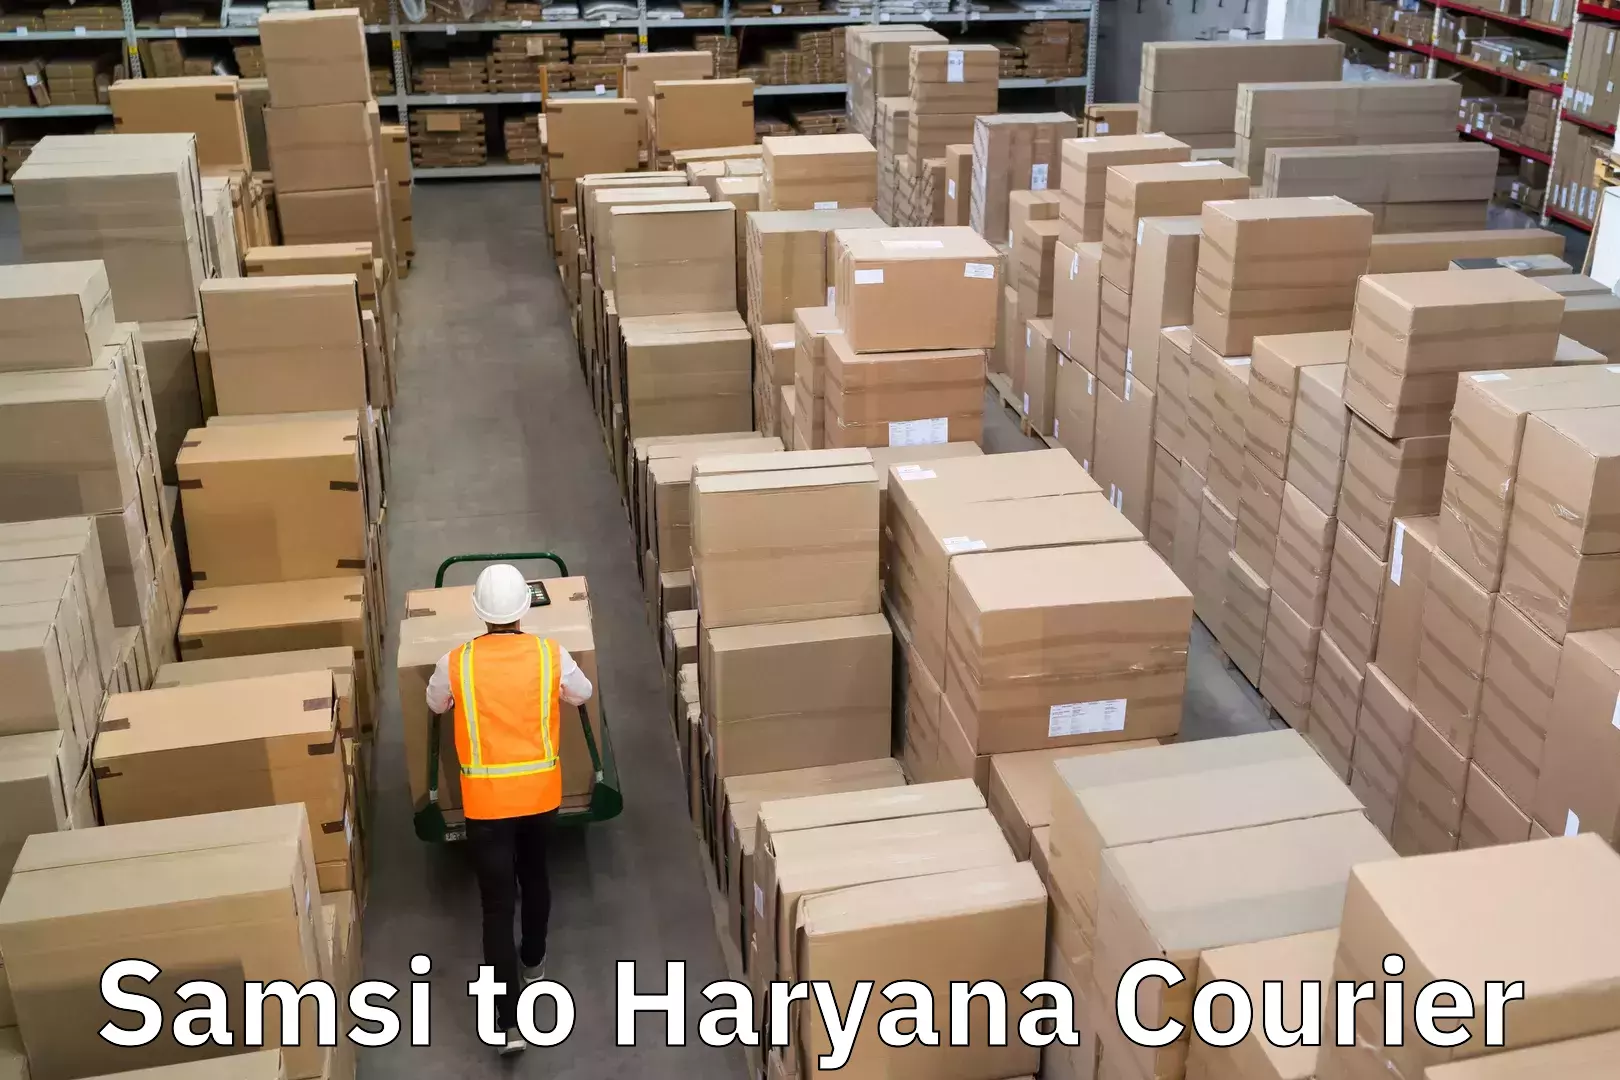 Courier service partnerships Samsi to Haryana